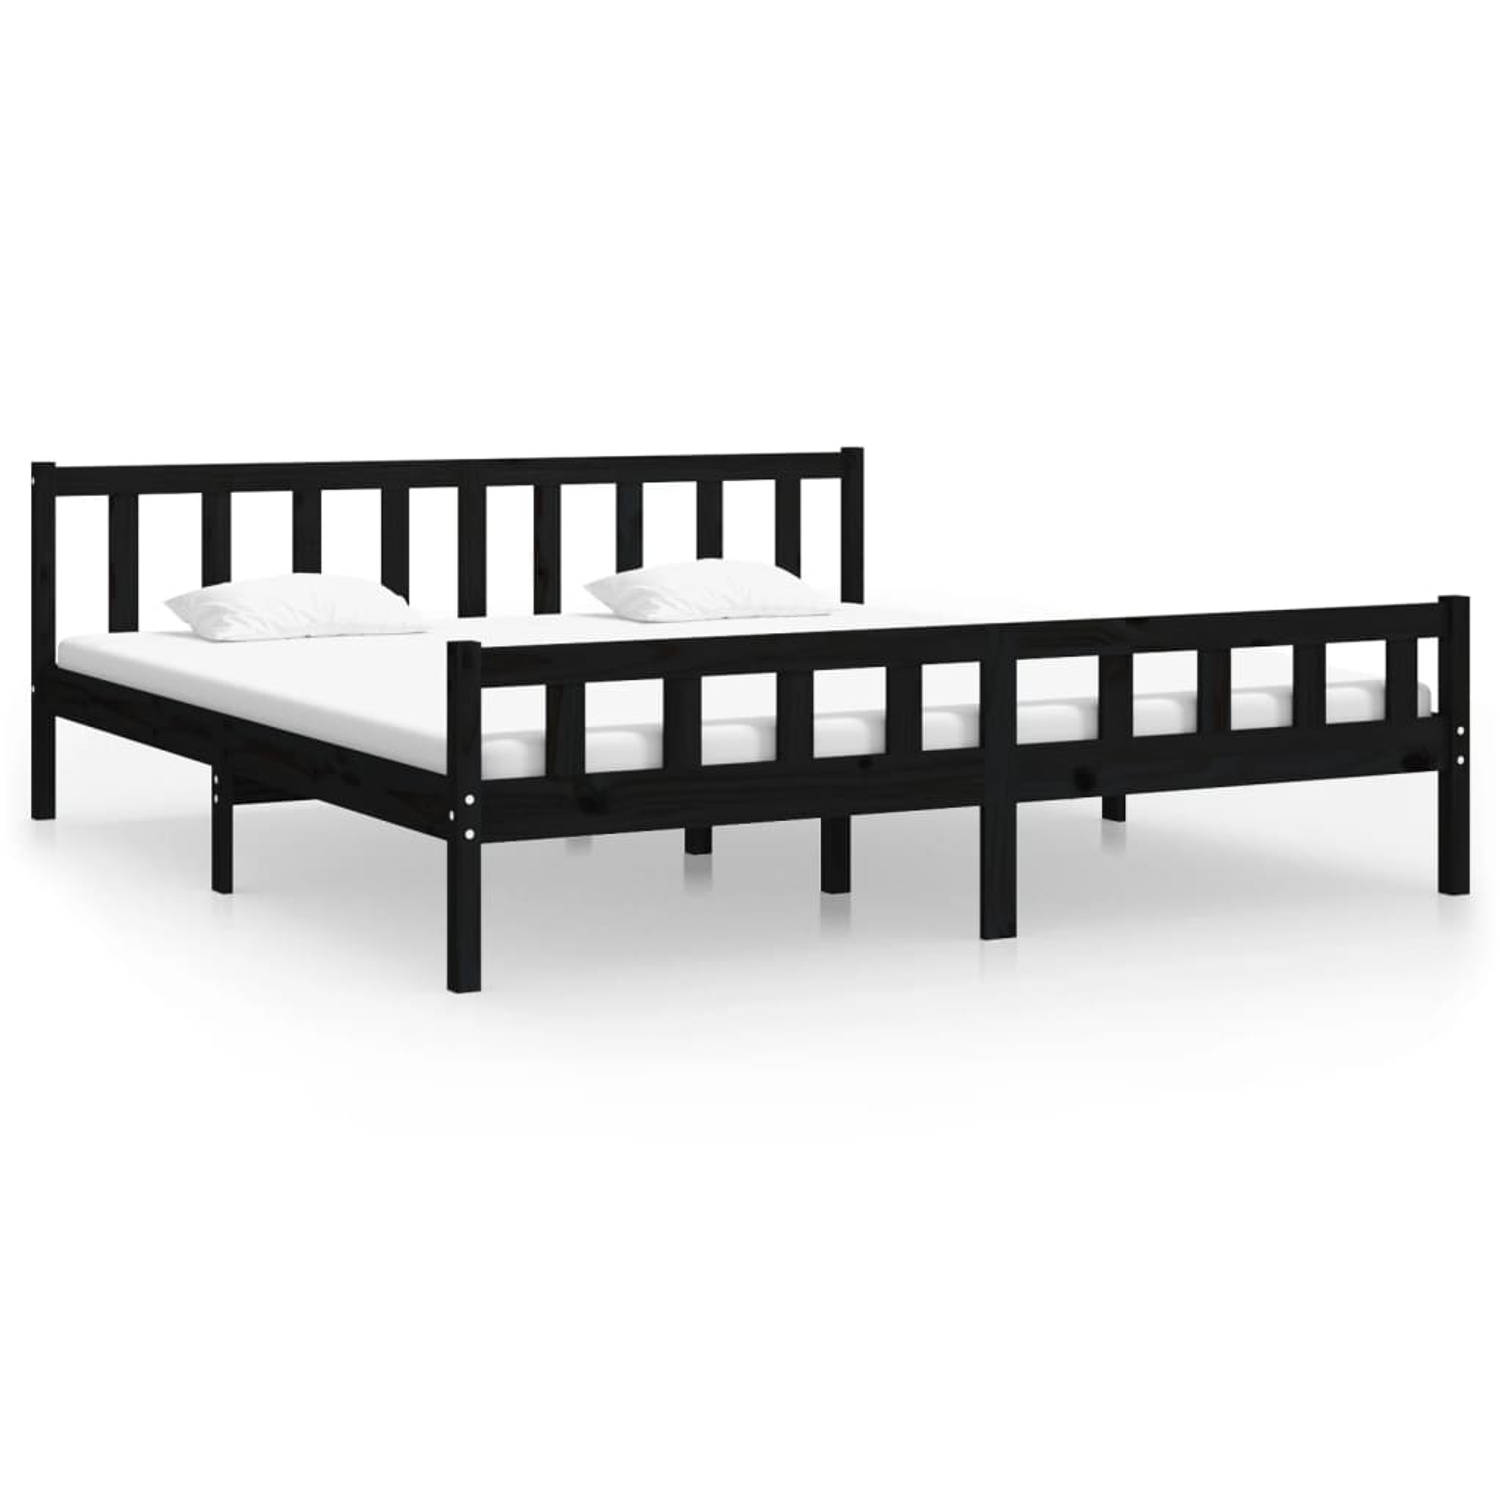 The Living Store Bedframe massief hout zwart 160x200 cm - Bedframe - Bedframes - Tweepersoonsbed - Bed - Bedombouw - Dubbel Bed - Frame - Bed Frame - Ledikant - Houten Bedframe - T